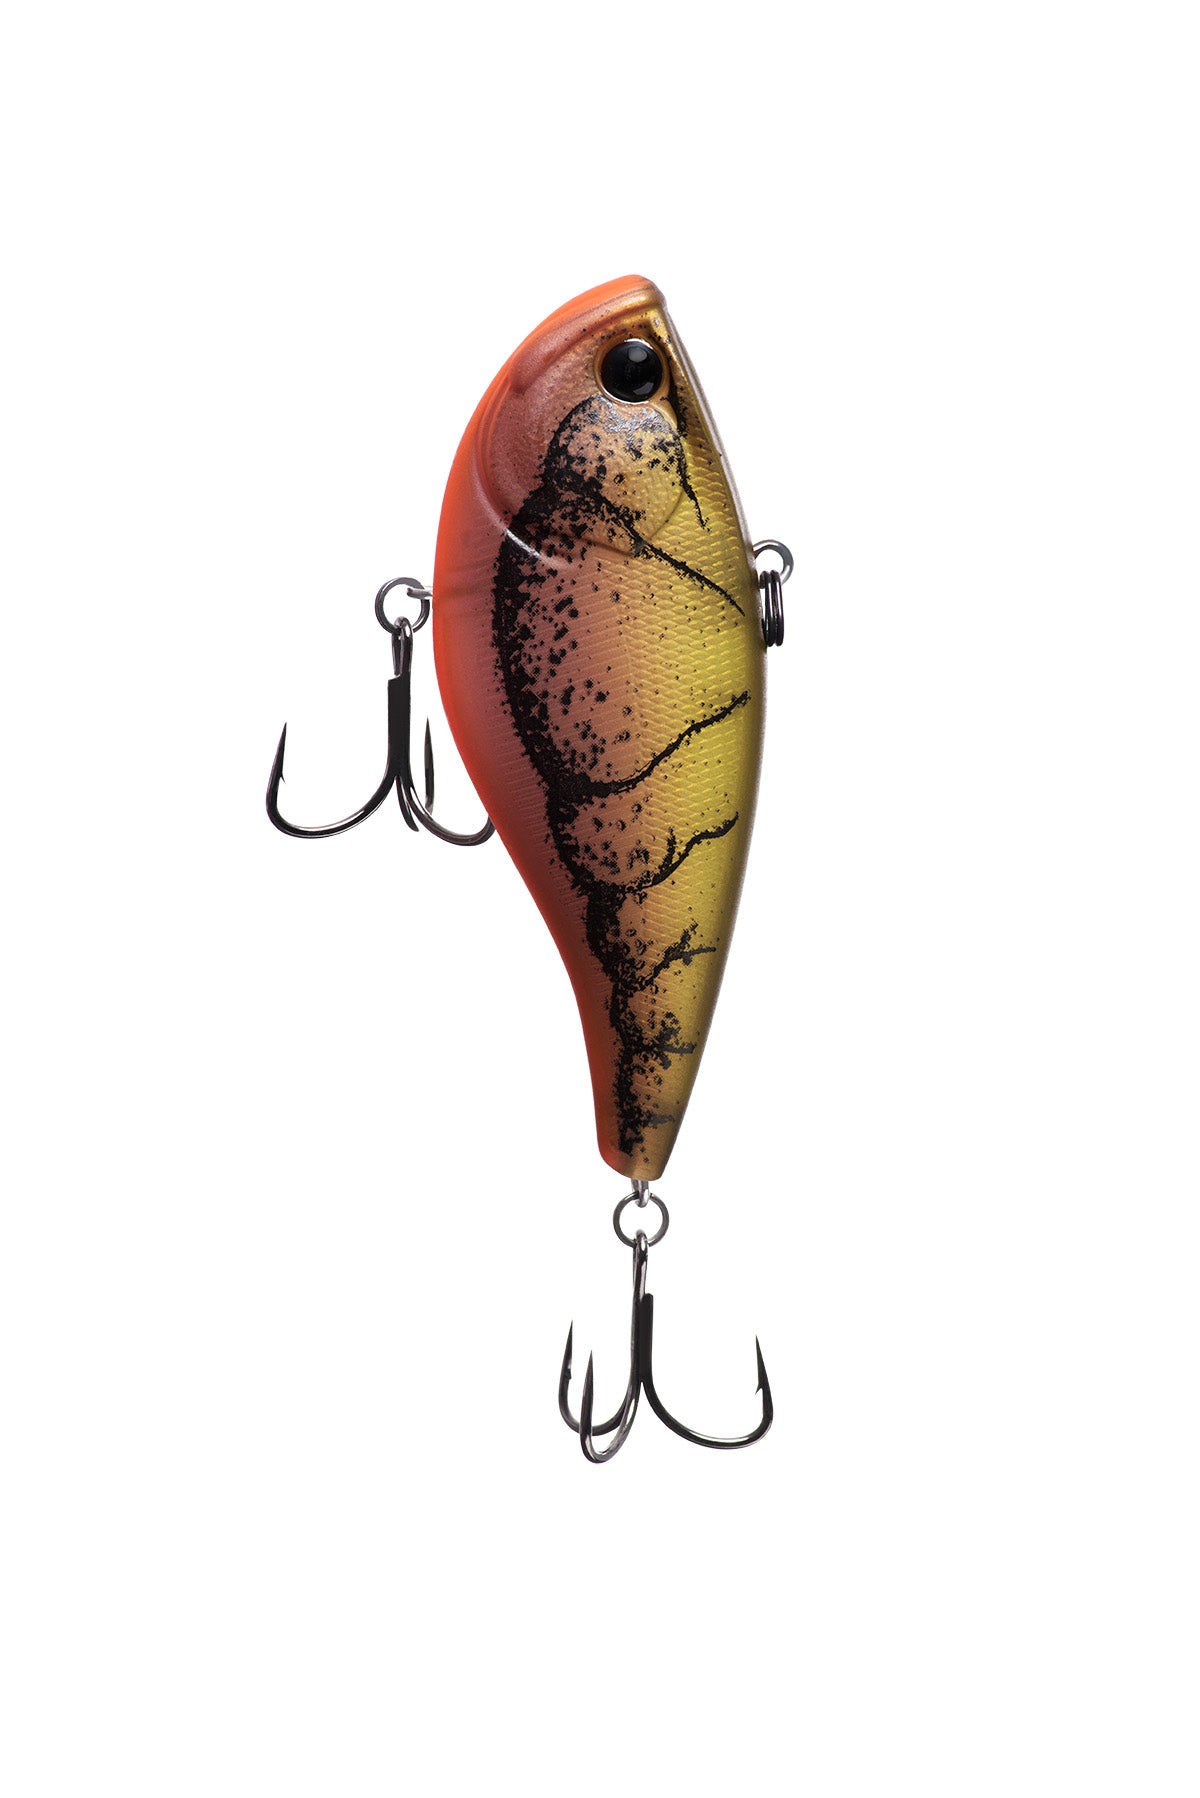 13 Fishing Magic Man Multi-Pitch Lipless Crankbait Olive Crush / 2 1/2 inch - 1/2 oz